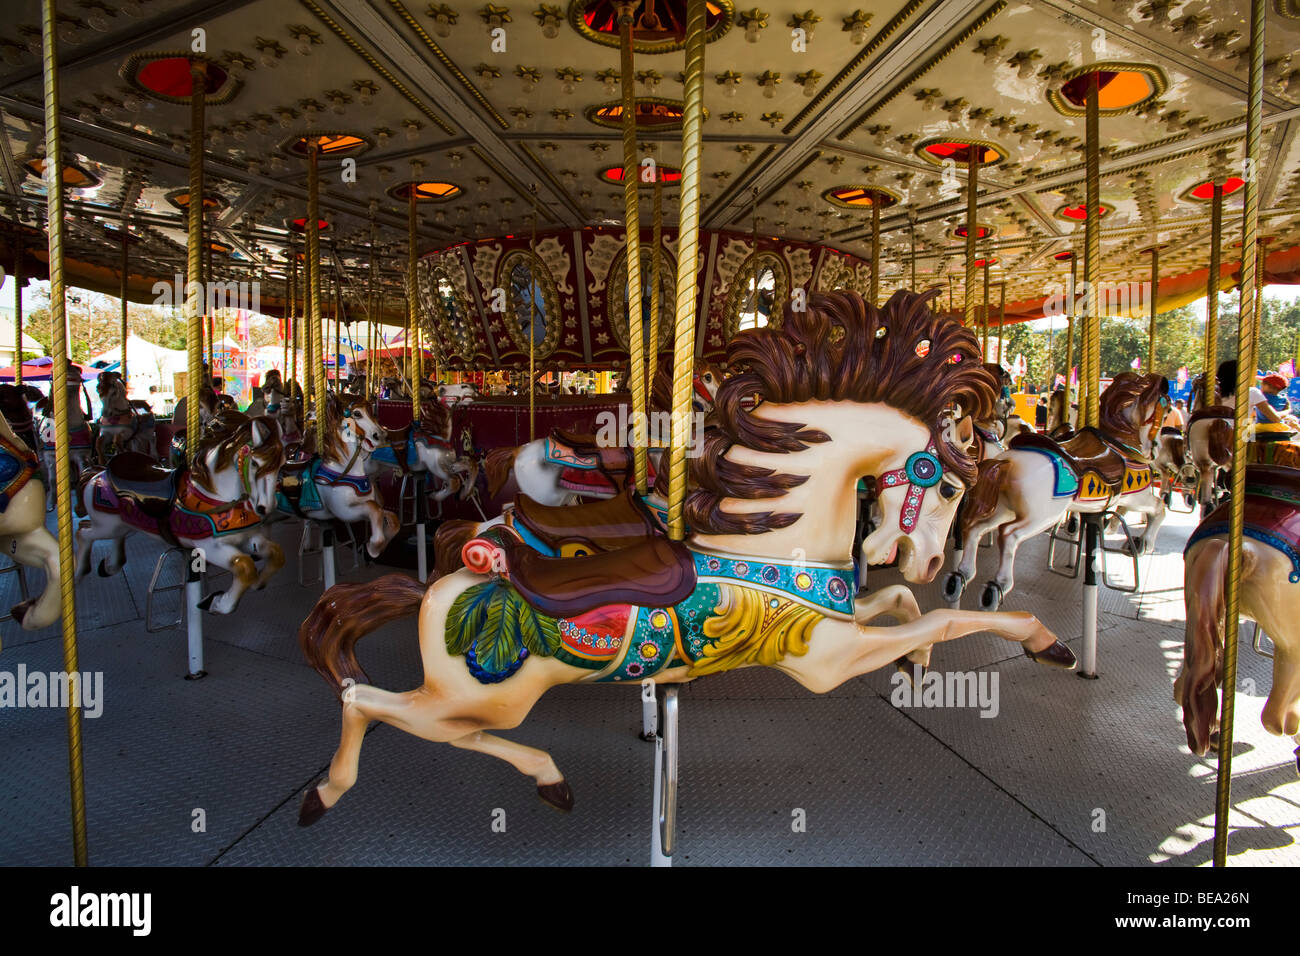 Carousel at the Los Angeles County Fair (2009) Pomona Fairplex Pomona, California, United States of America Stock Photo